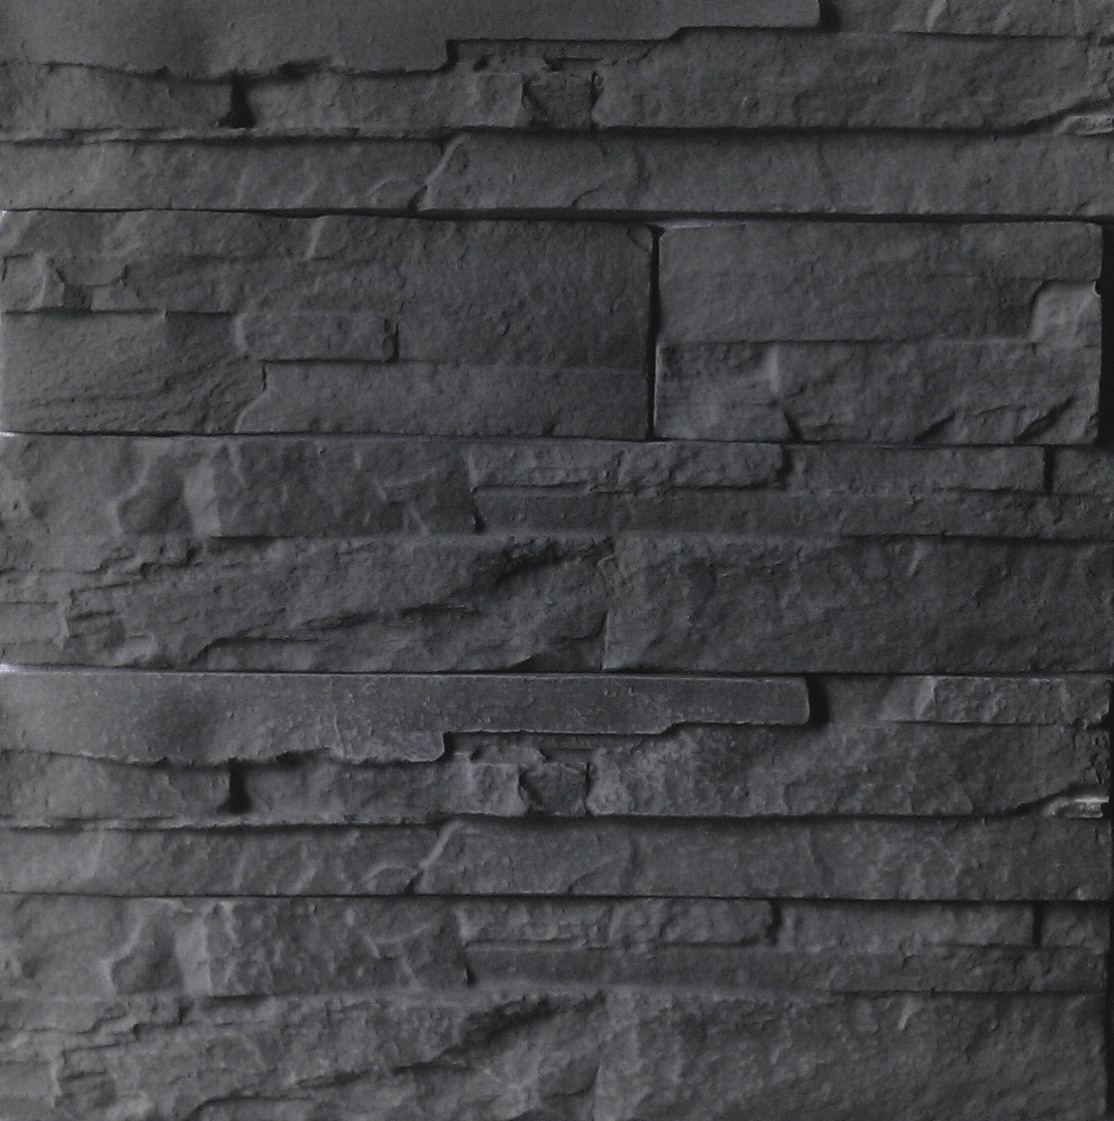 RAMO искусственный камень КОЛОРАДО СЛИМ темно-серый сланец (бетон) 1м2/уп, RAMO искусственный камень КОЛОРАДО СЛИМ темно-серый сланец (бетон) 1м2/уп